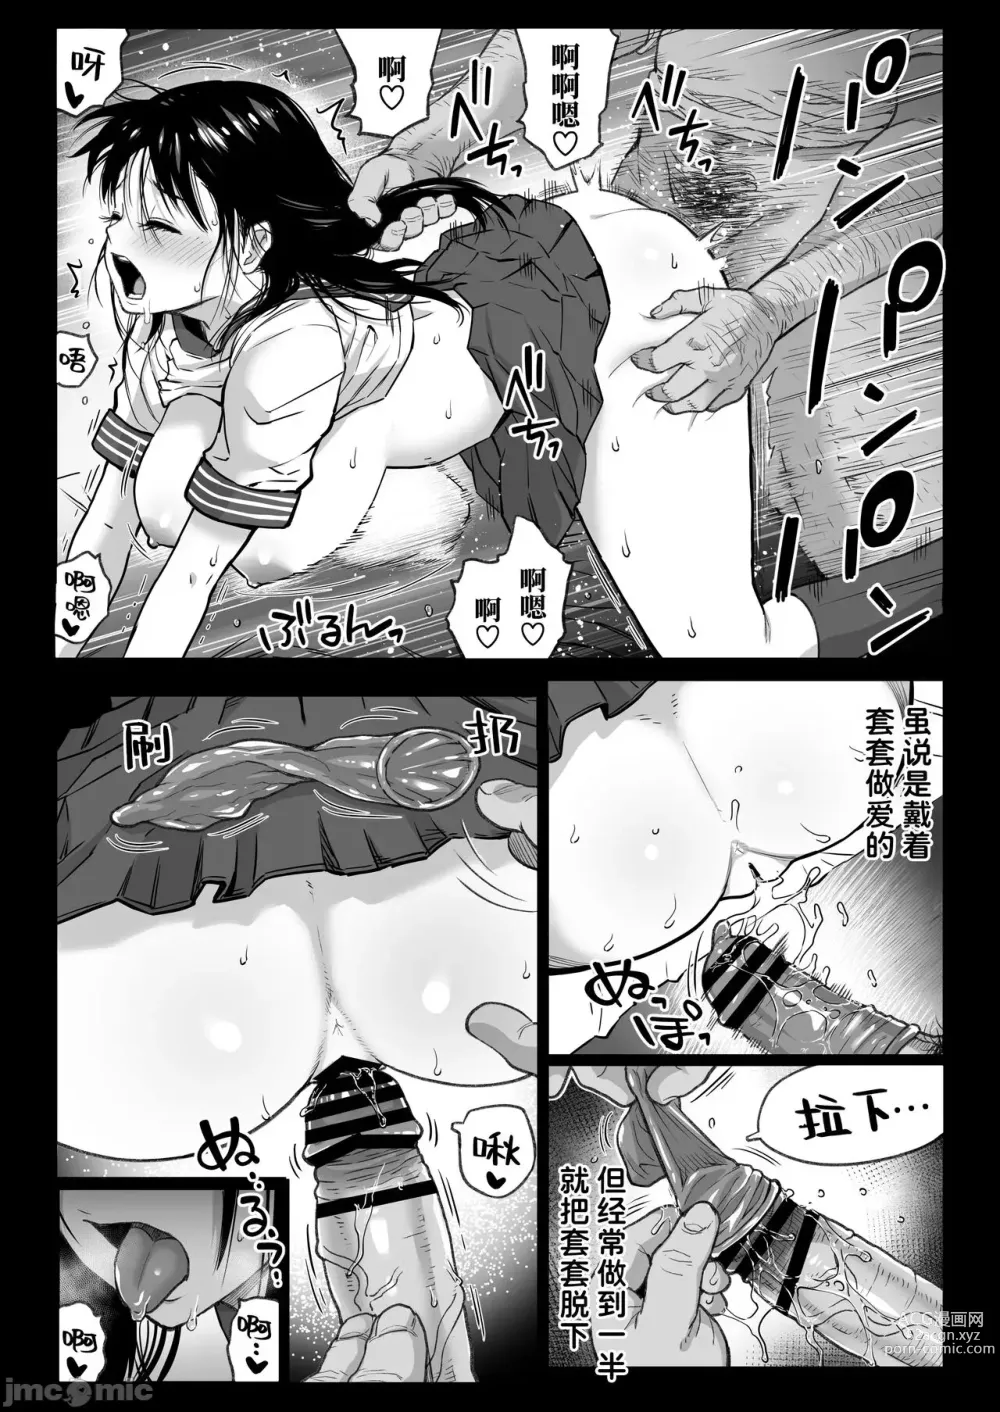 Page 77 of doujinshi 彼氏持ち学生バイト弓野ちゃんは 今日も店長に狙われる